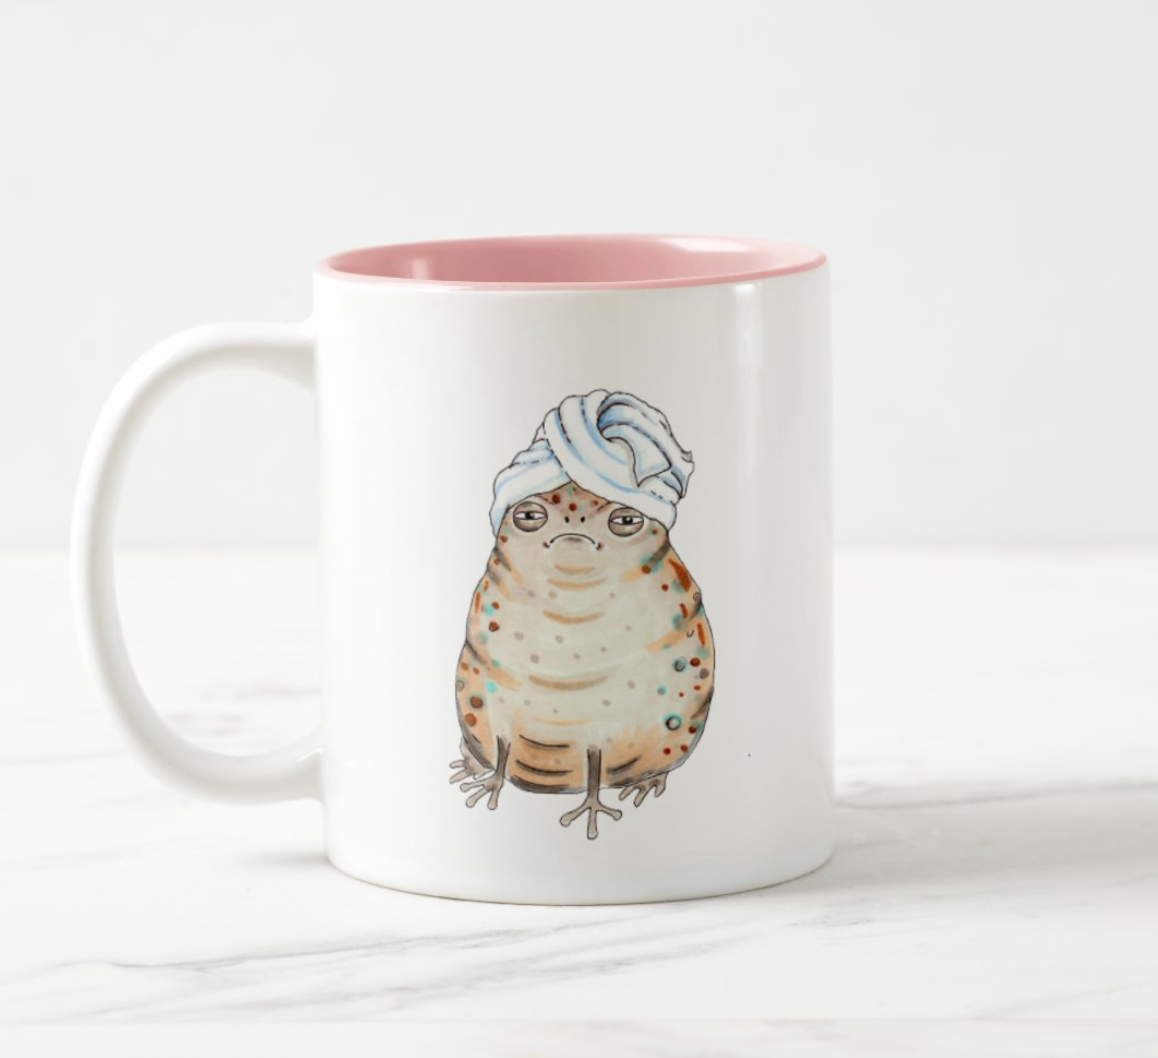 Toad in a Towel mug